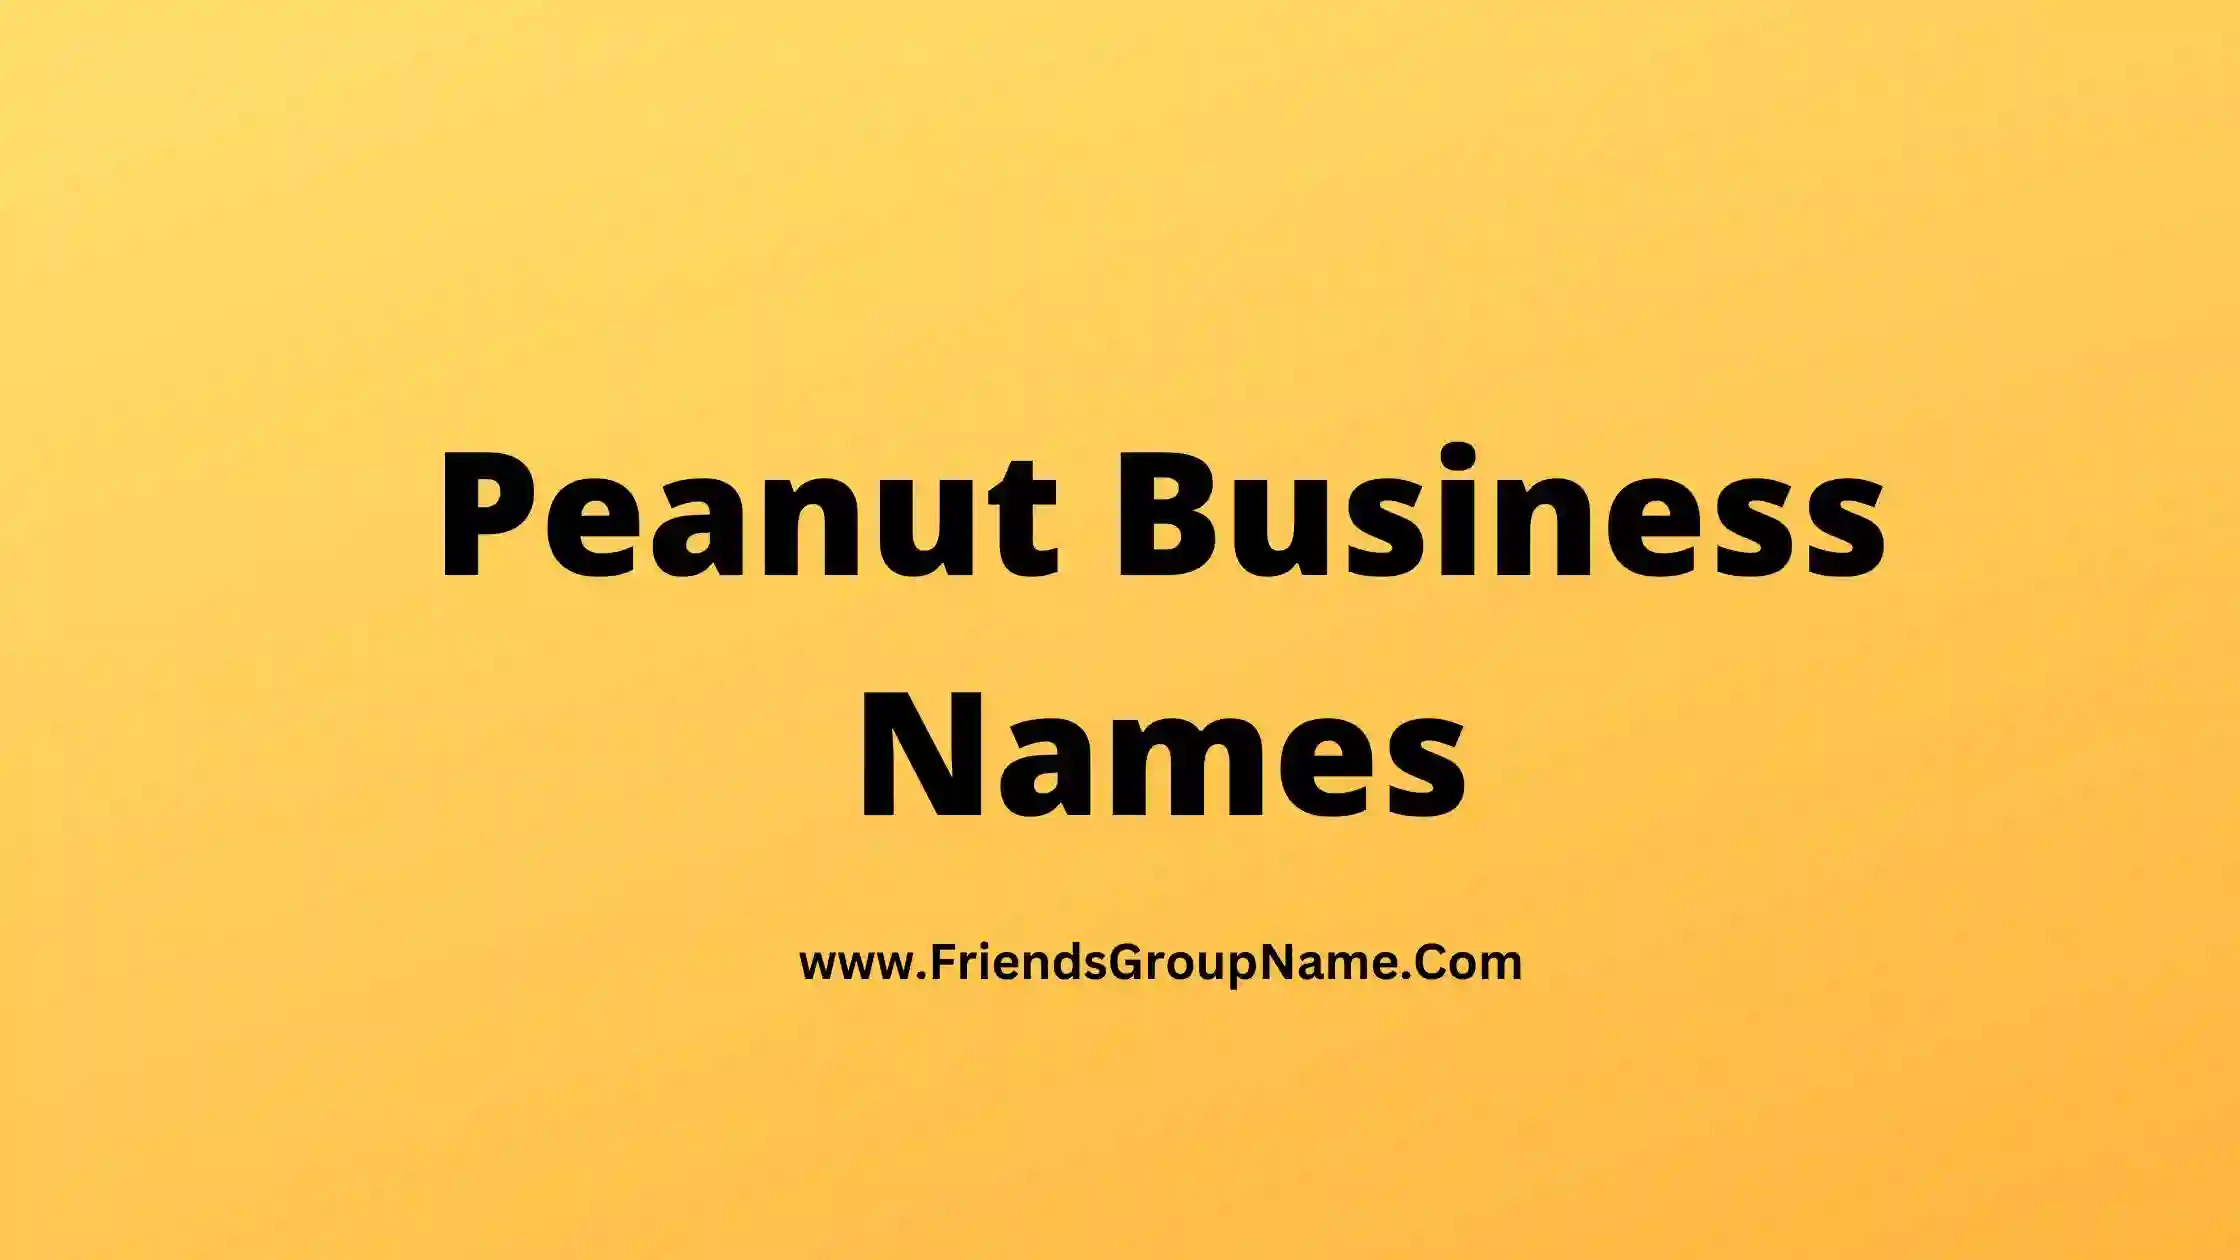 Peanut Business Names